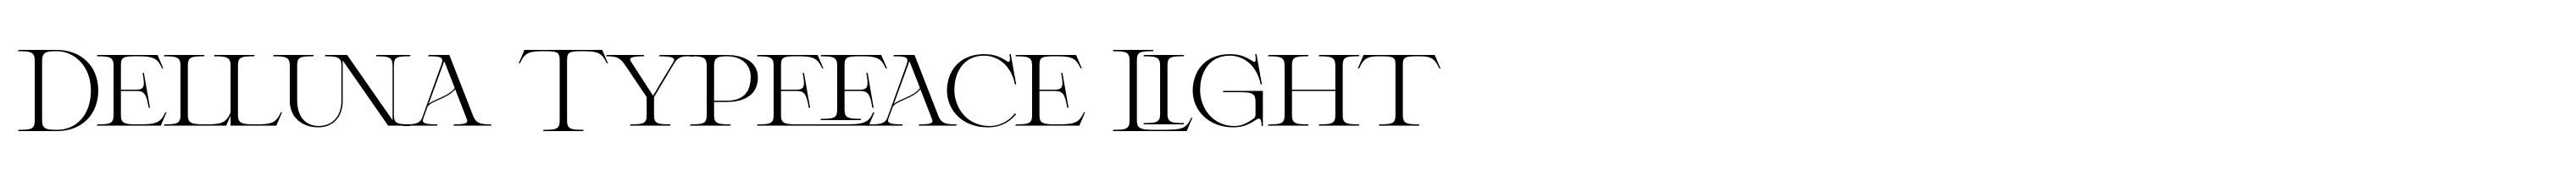 Delluna Typeface Light